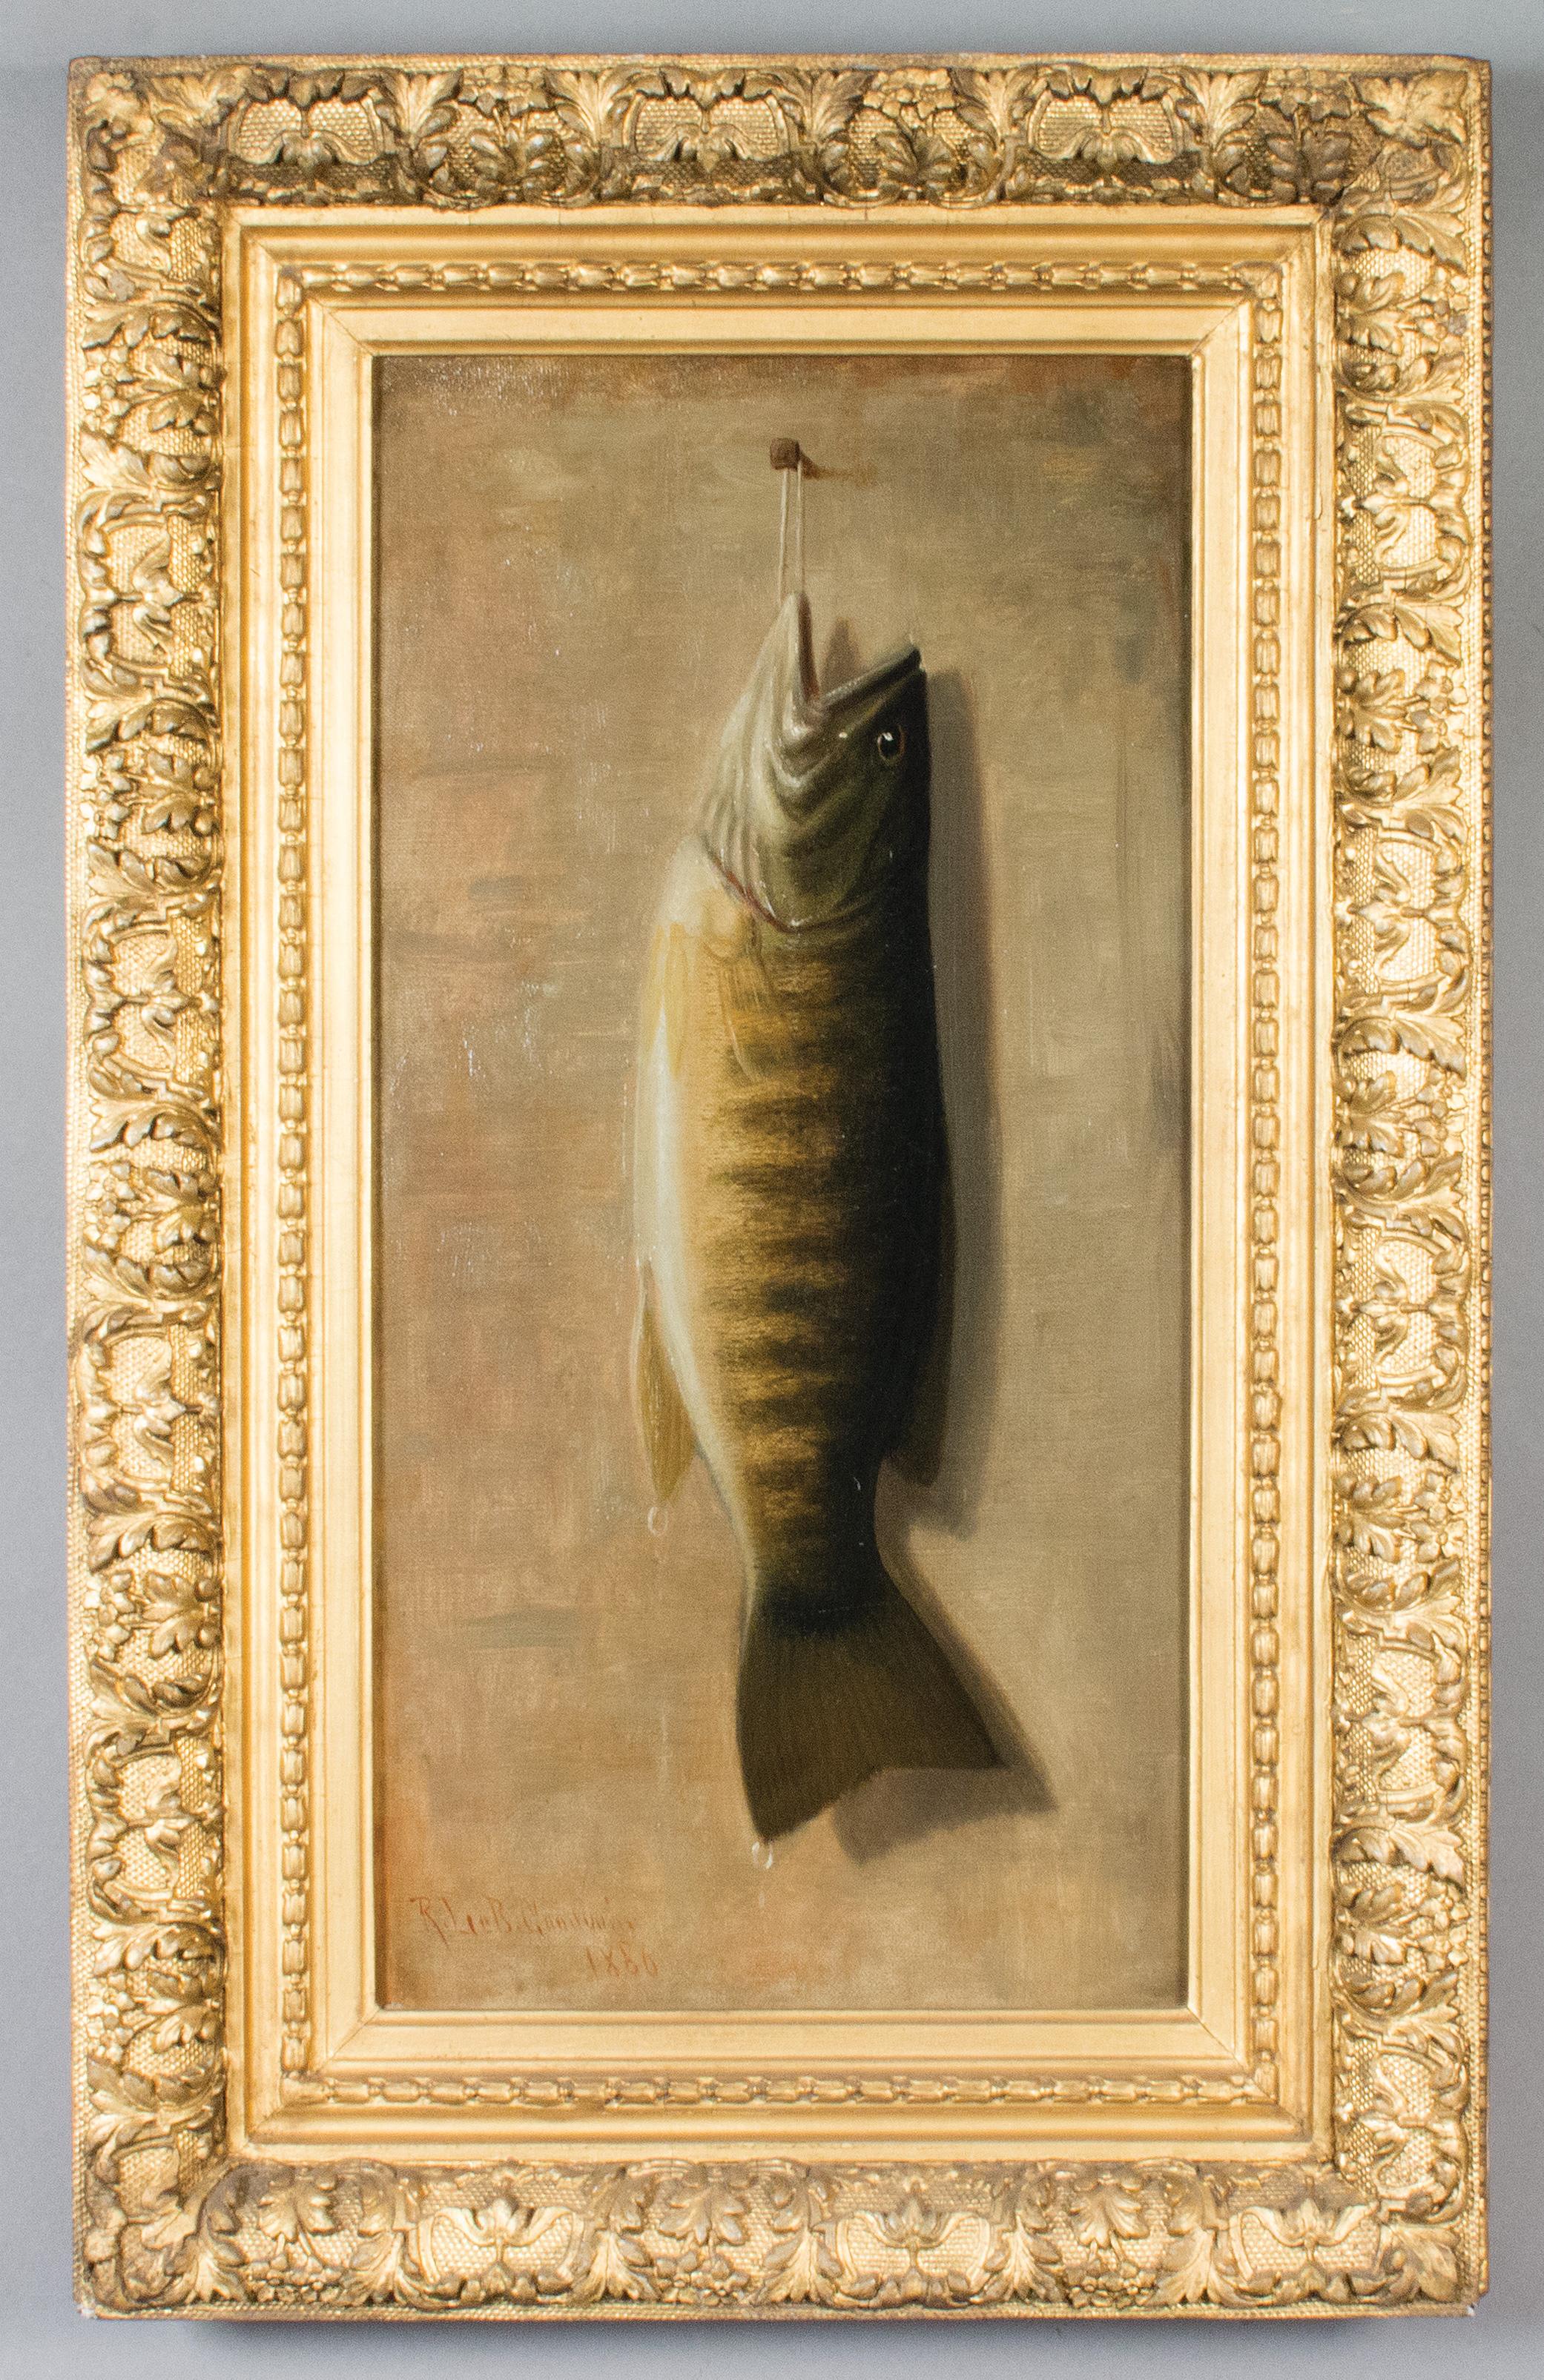 Richard Labarre Goodwin Animal Painting - Trophy Fish by Upstate New York Artist Richard Goodwin, 1860